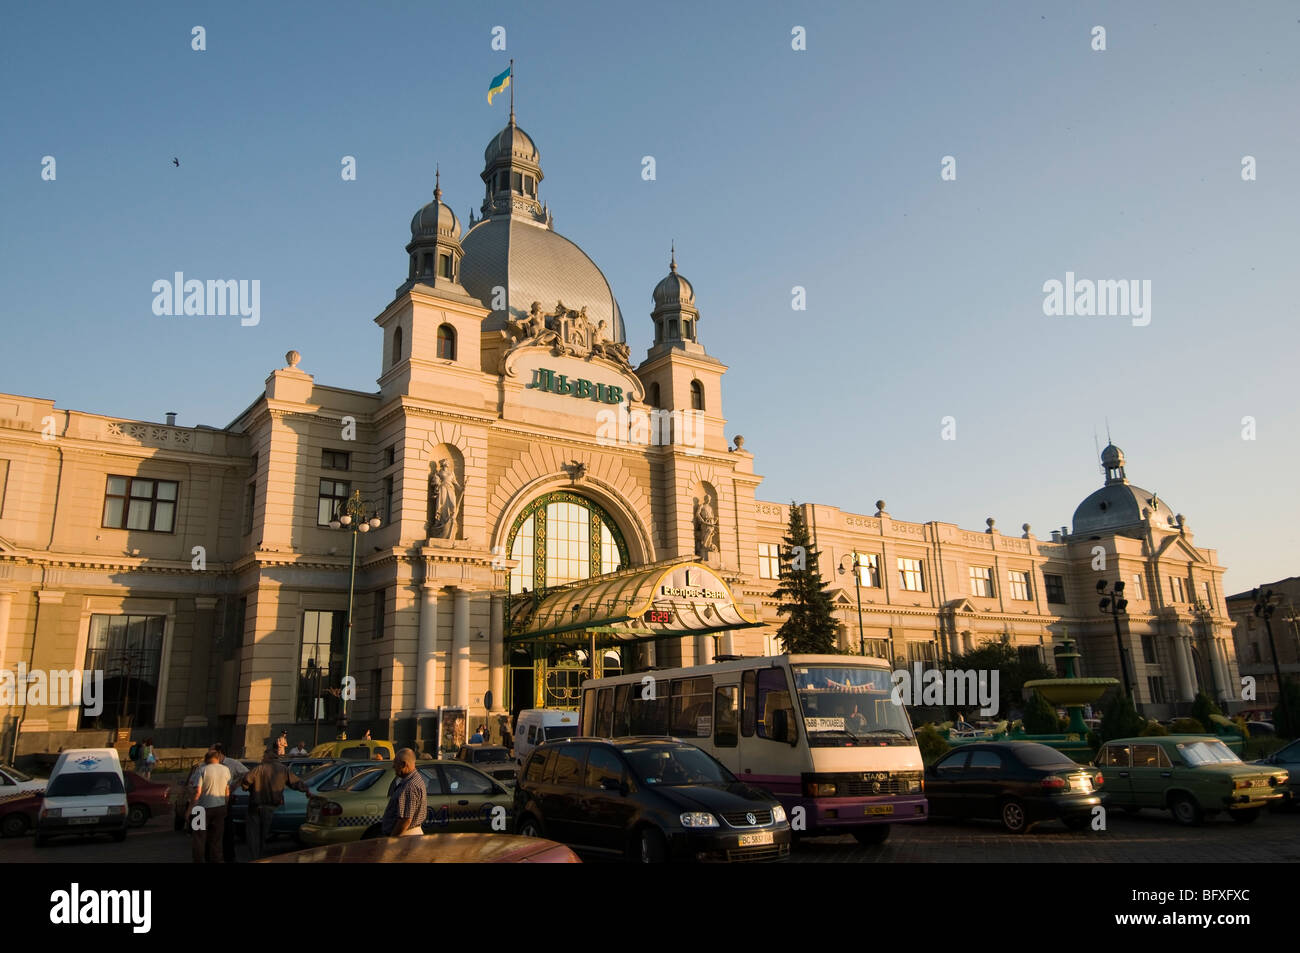 Railway station in Lviv, Ukraine Stock Photo